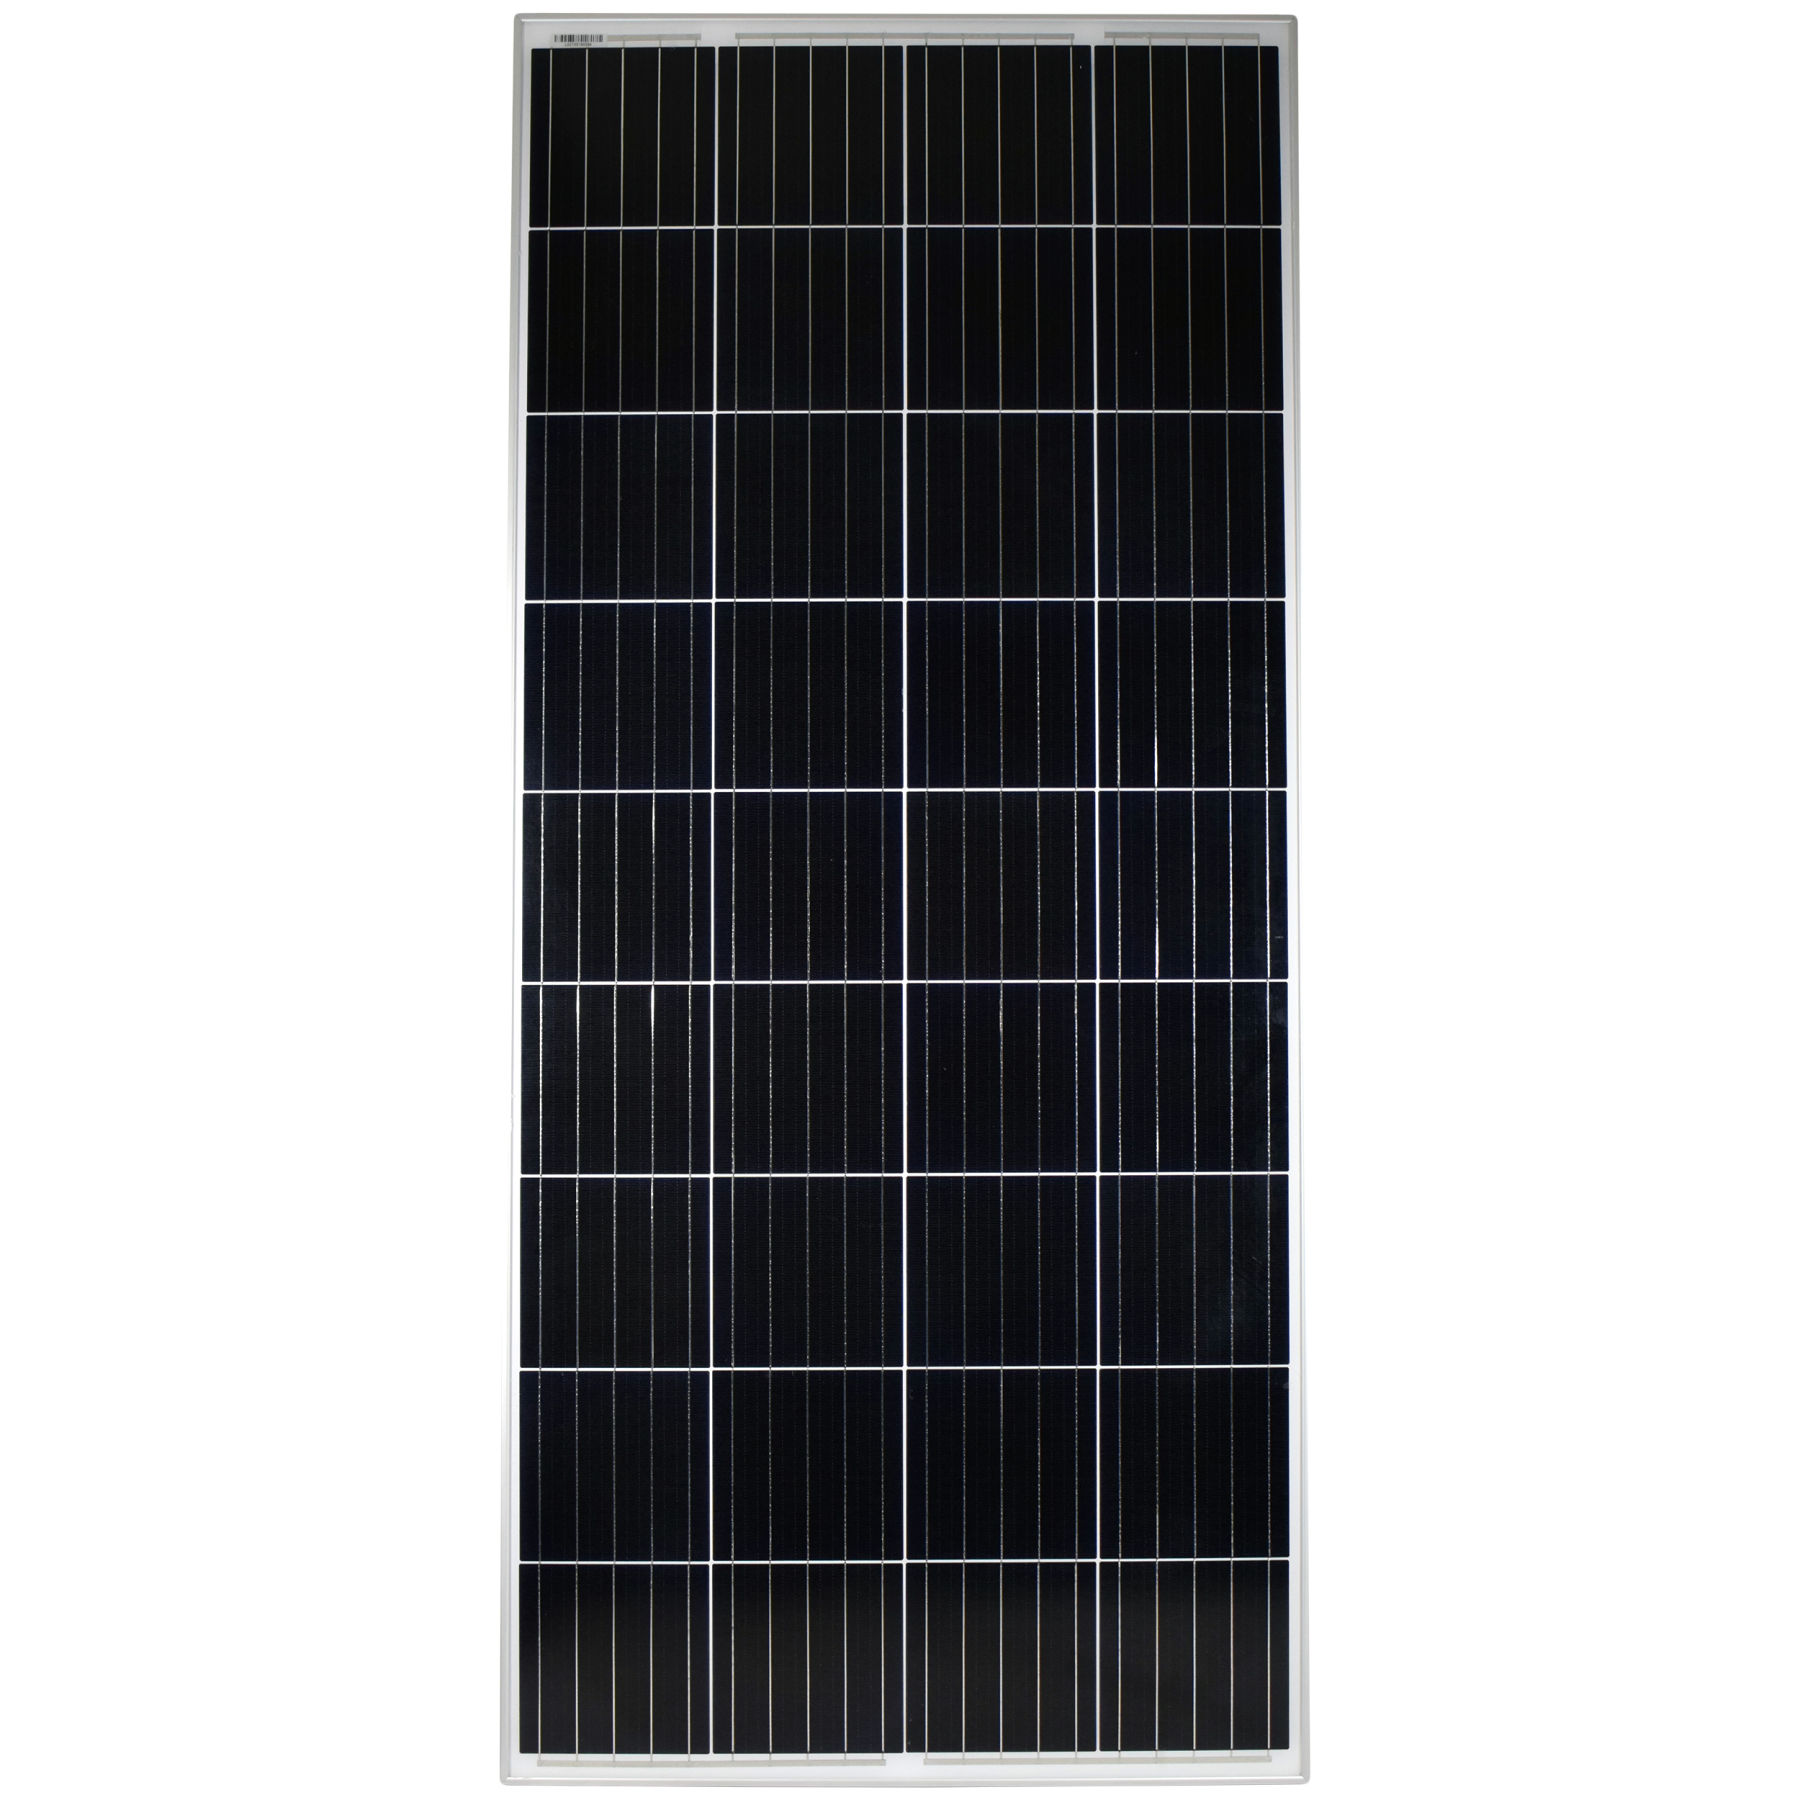 Solarland 12v 180 Watt High Efficiency PERC Technology Monocrystalline Solar Panel